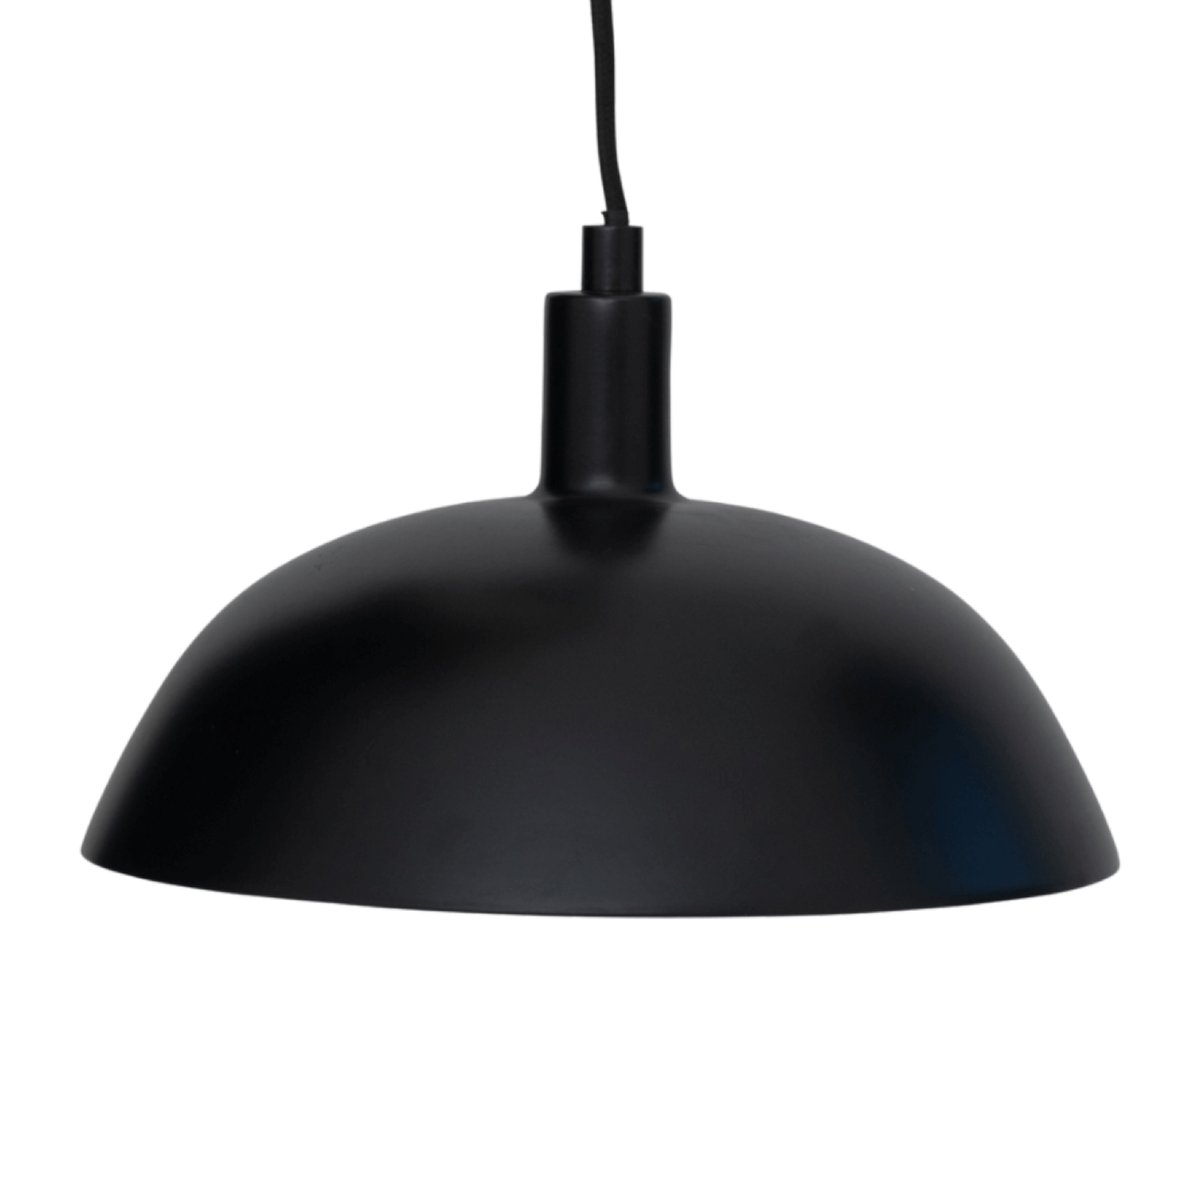 URBAN NATURE CULTURE Mathematic hanglamp M Ø26 cm Black